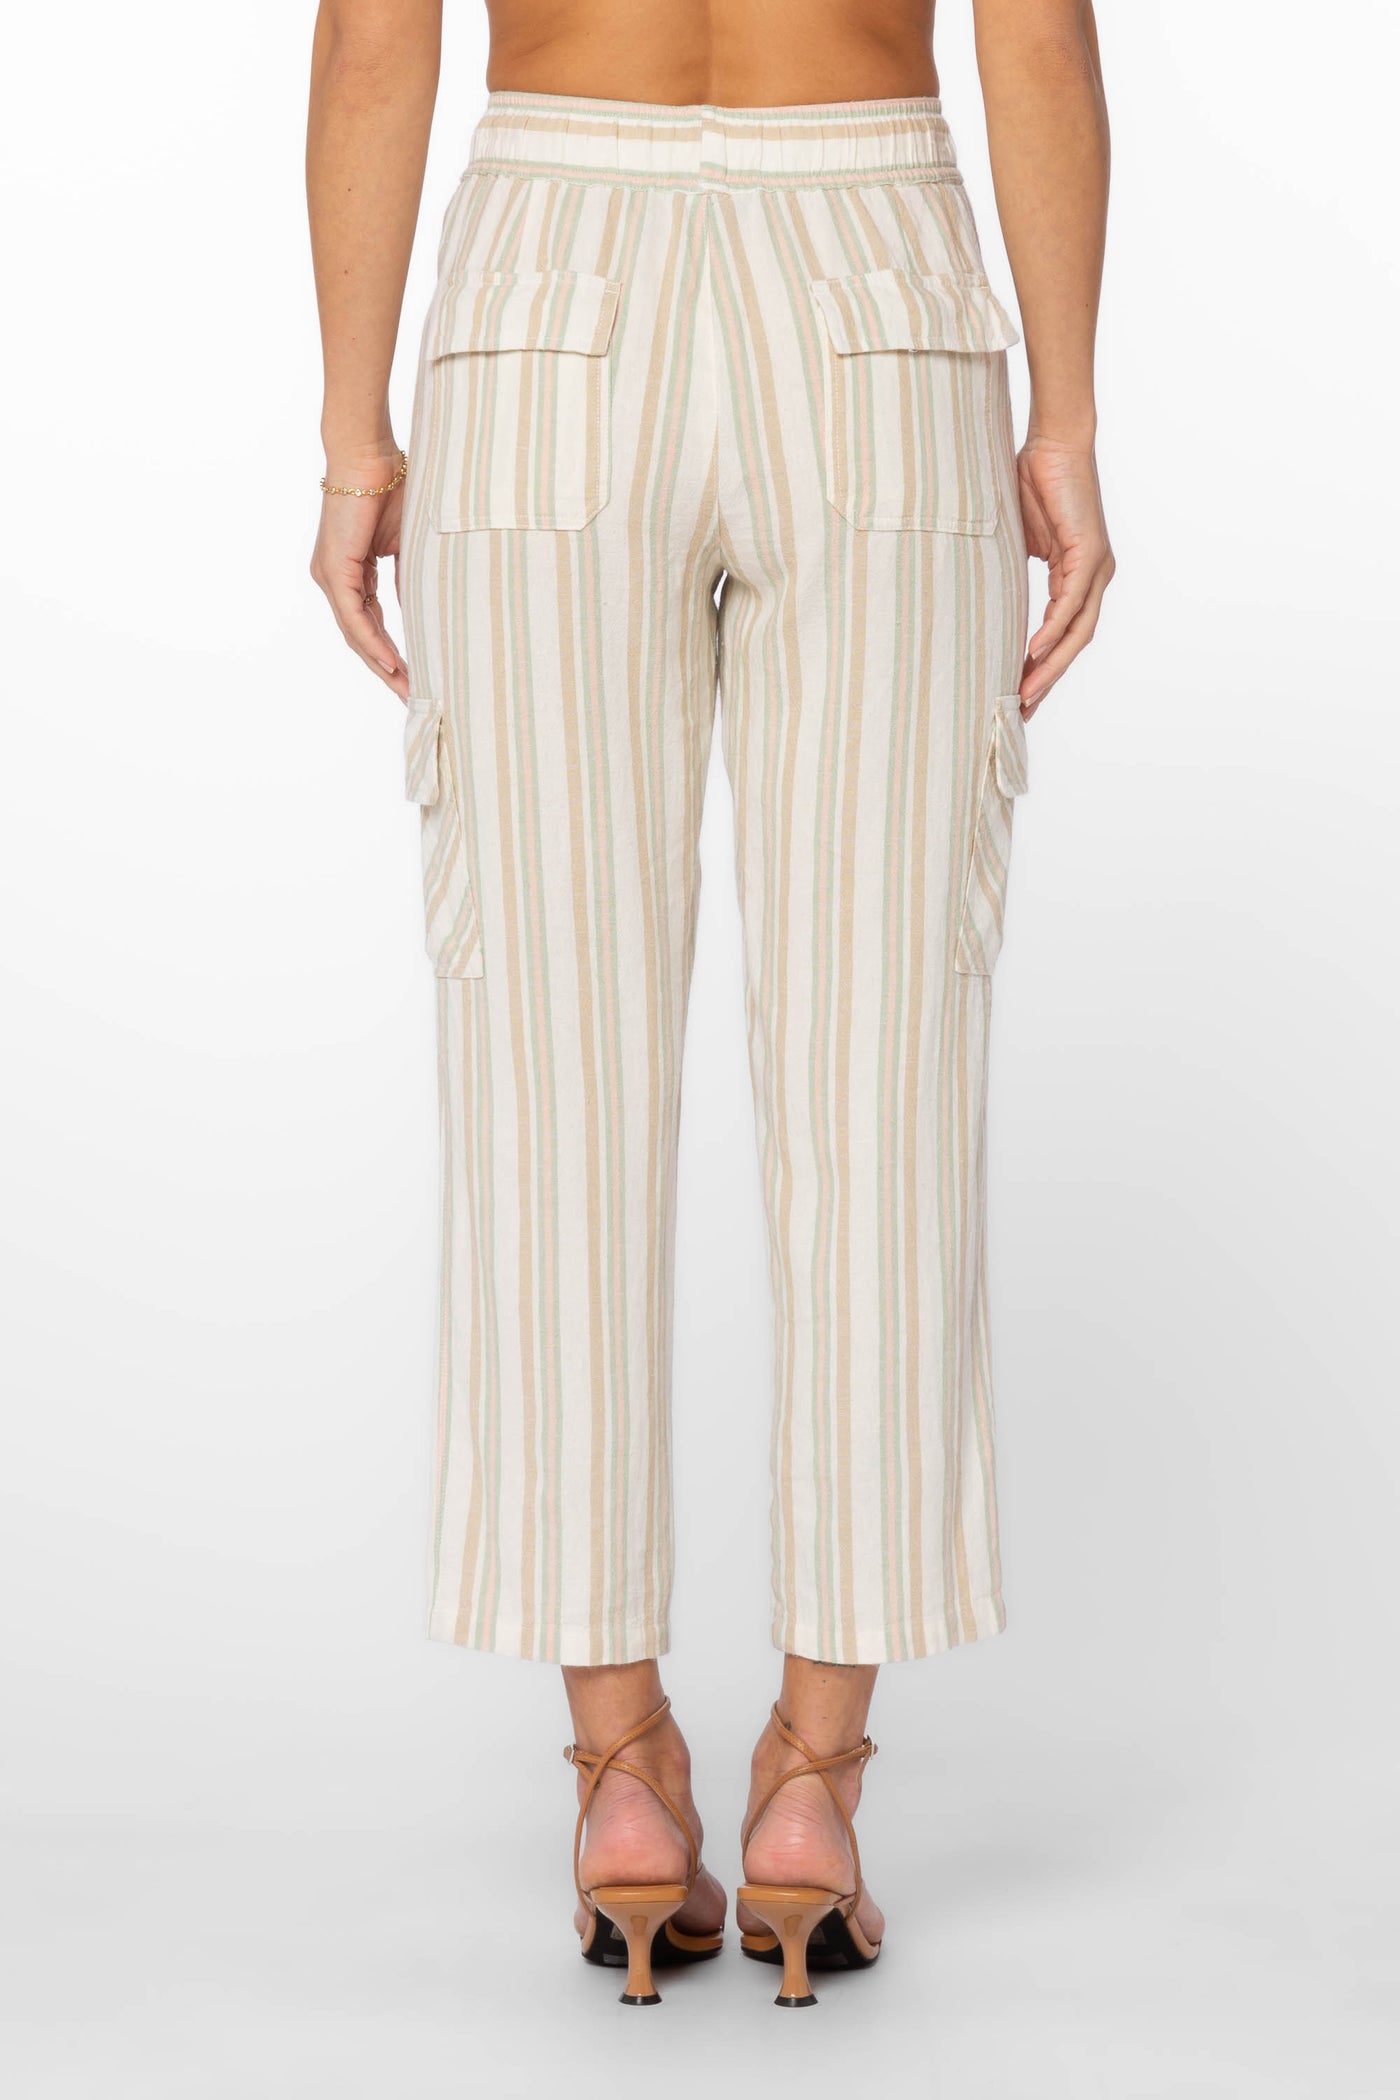 Lunay Sage Stripe Pants - Bottoms - Velvet Heart Clothing